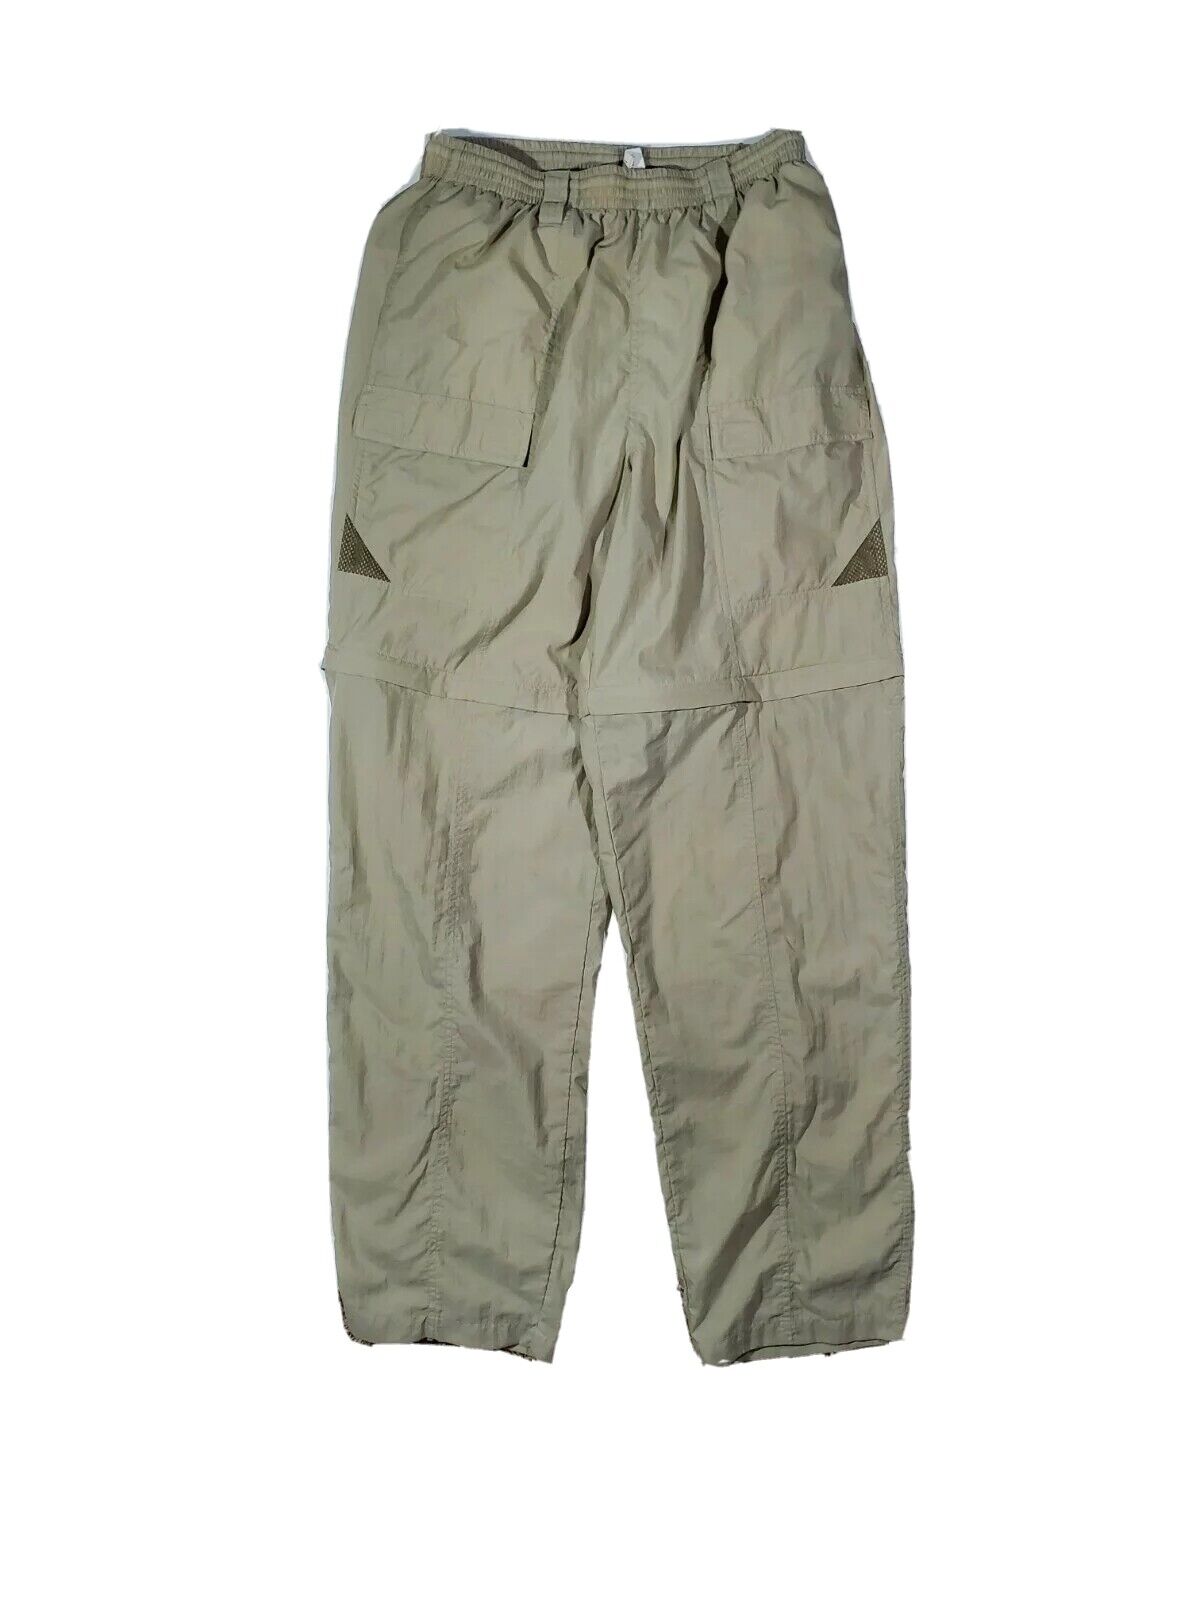 Columbia Pfg Convertible Cargo Pants Mens Medium Nylon Shorts Beige